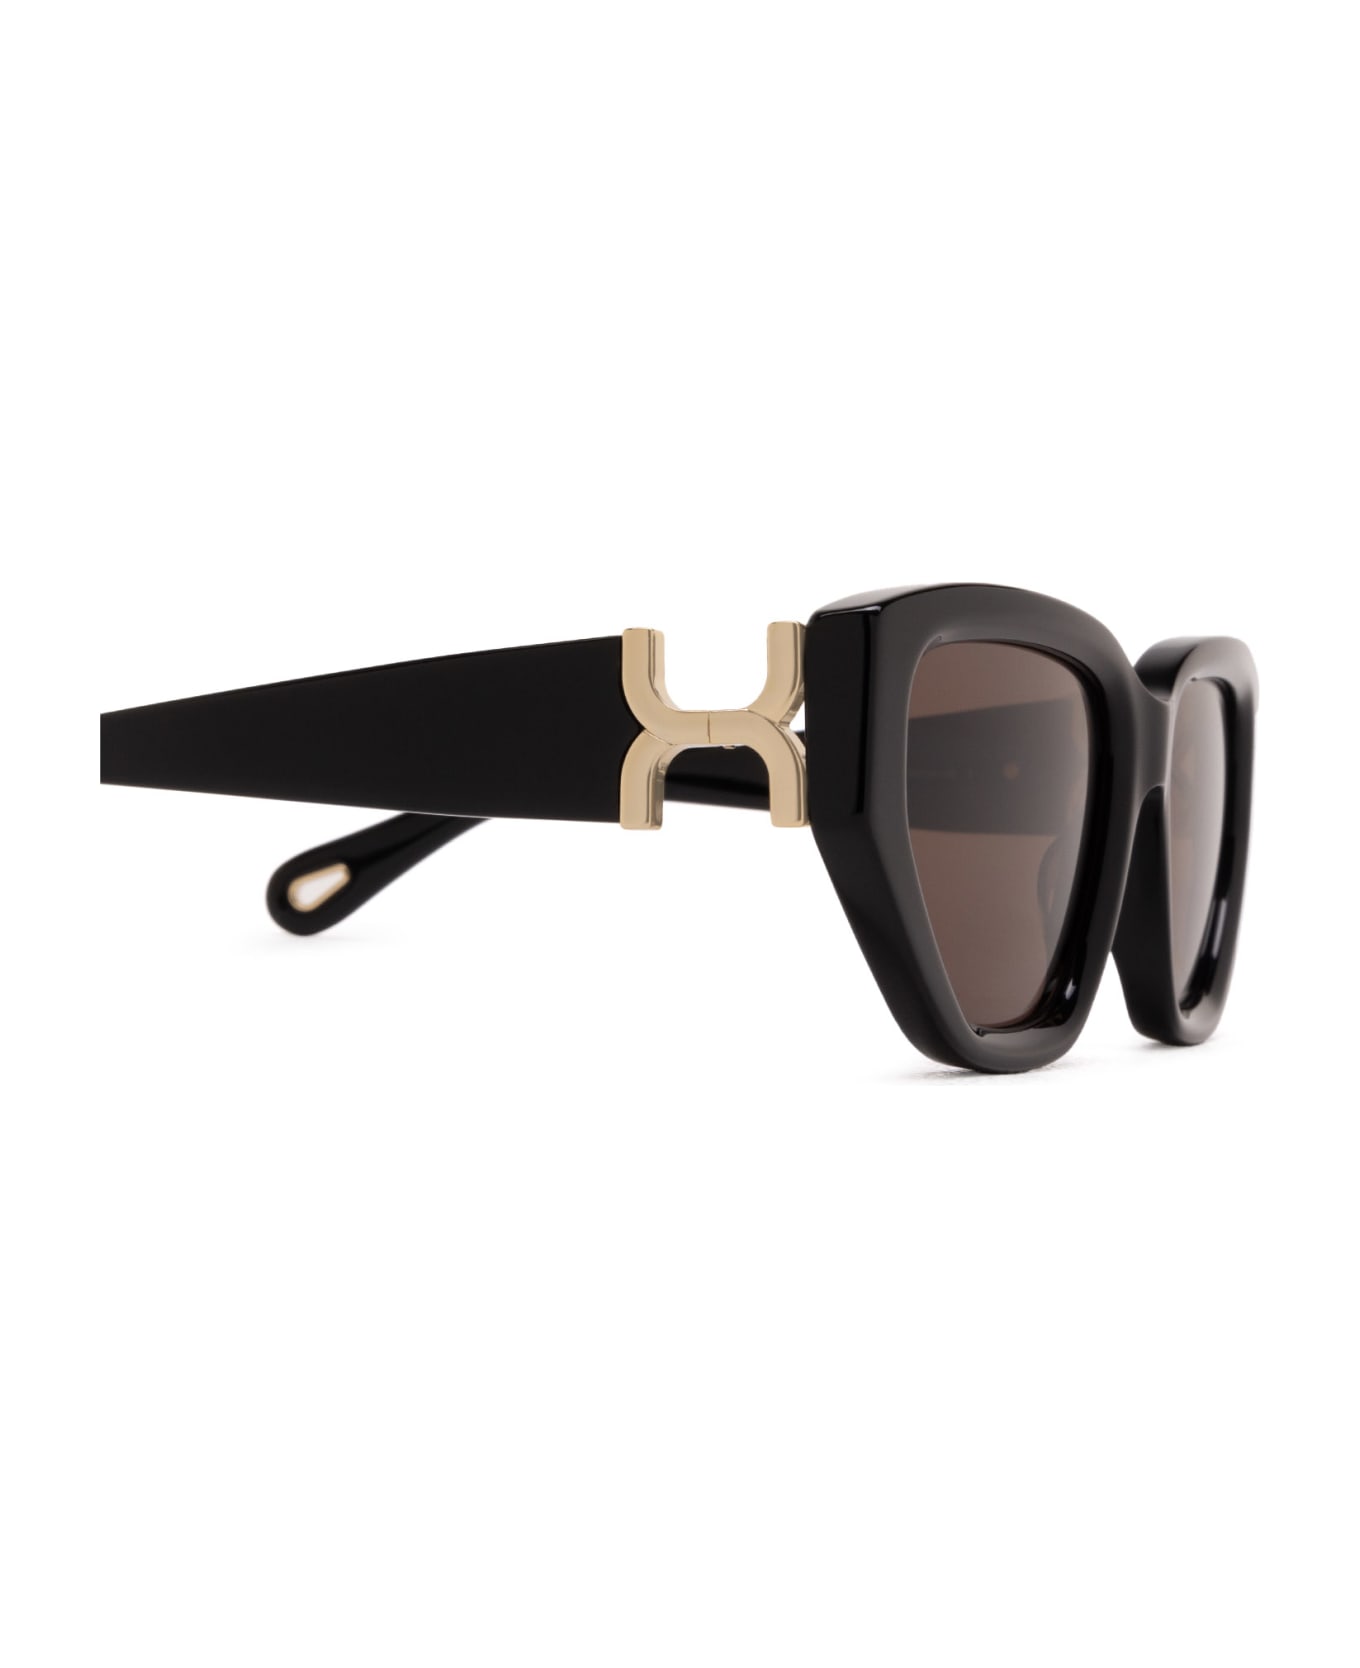 Chloé Eyewear Ch0235s Black Sunglasses - Black